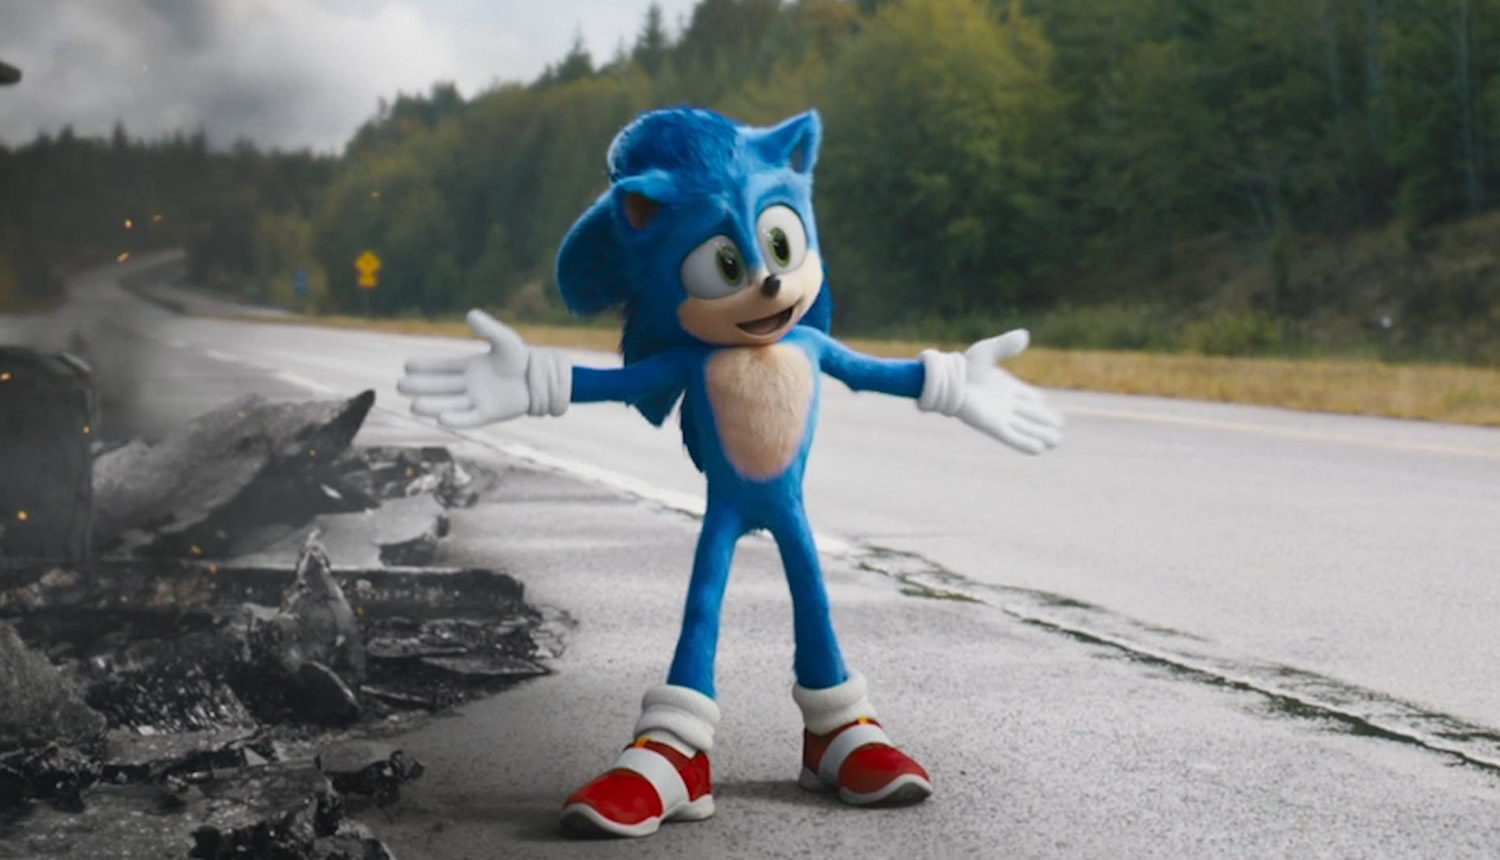 sonic the hedgehog box office grossing superhero film 2020